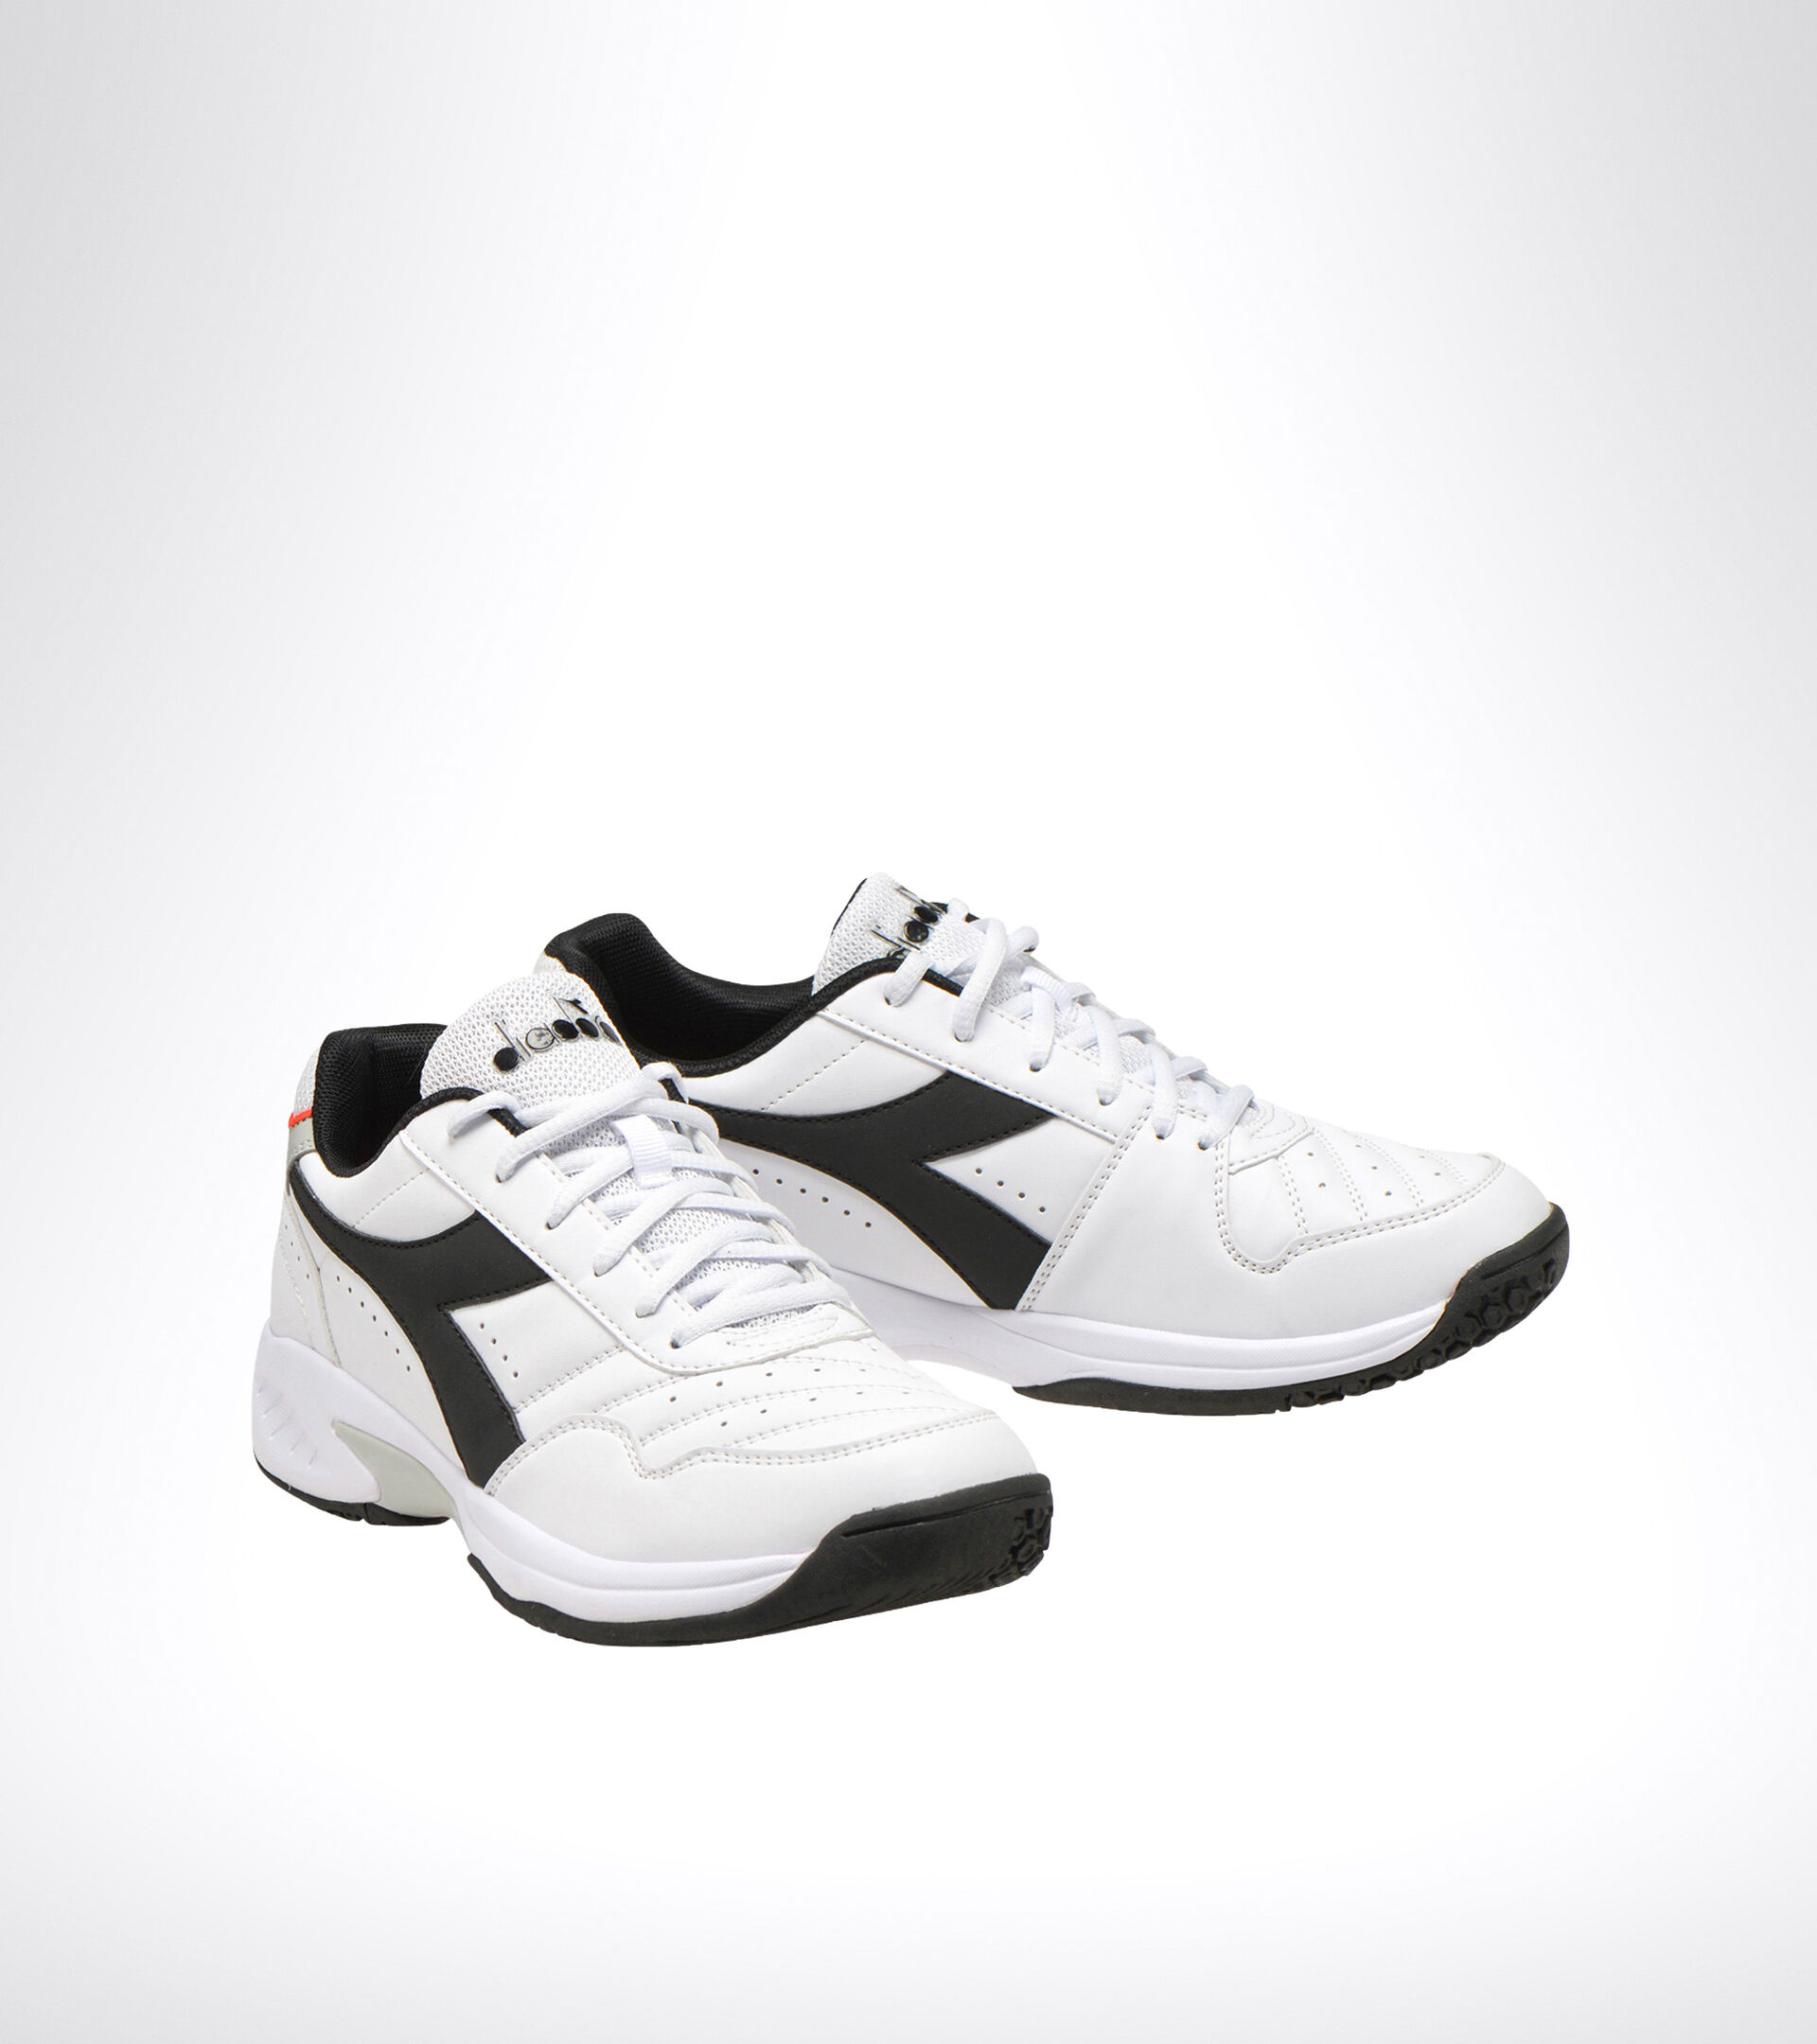 Chaussures de tennis - Homme VOLEE 4 BLANC/NOIR (C0351). - Diadora